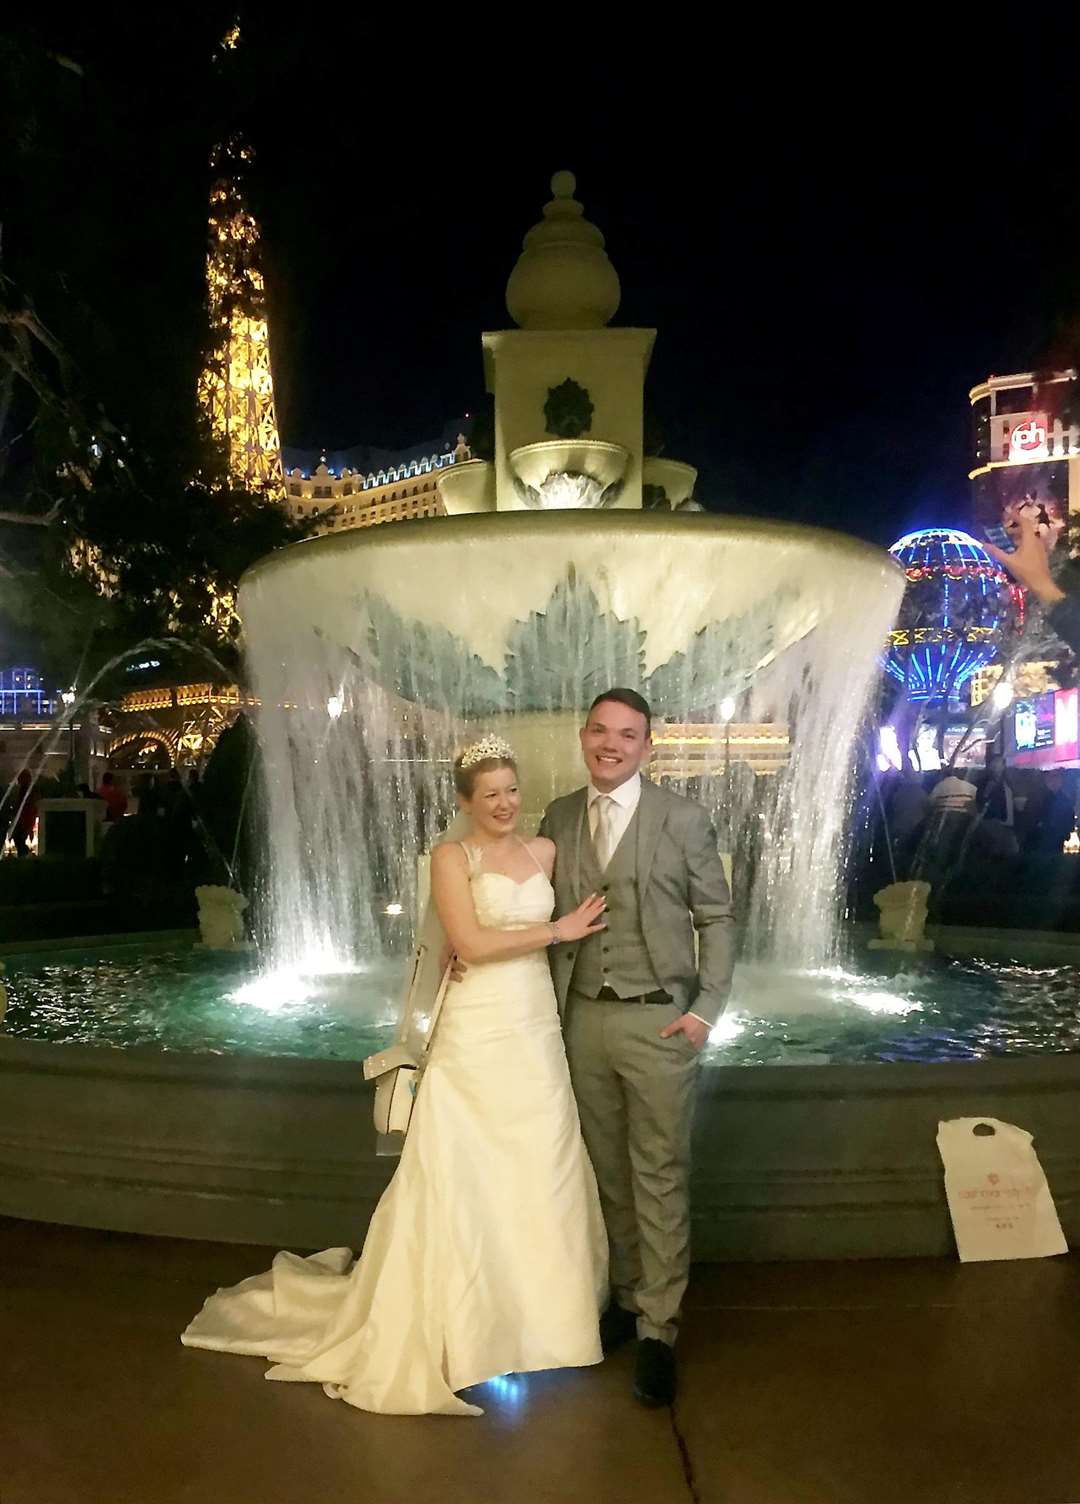 Sarah Elliott, 34, and Paul Edwards, 36, at their marriage in Las Vegas